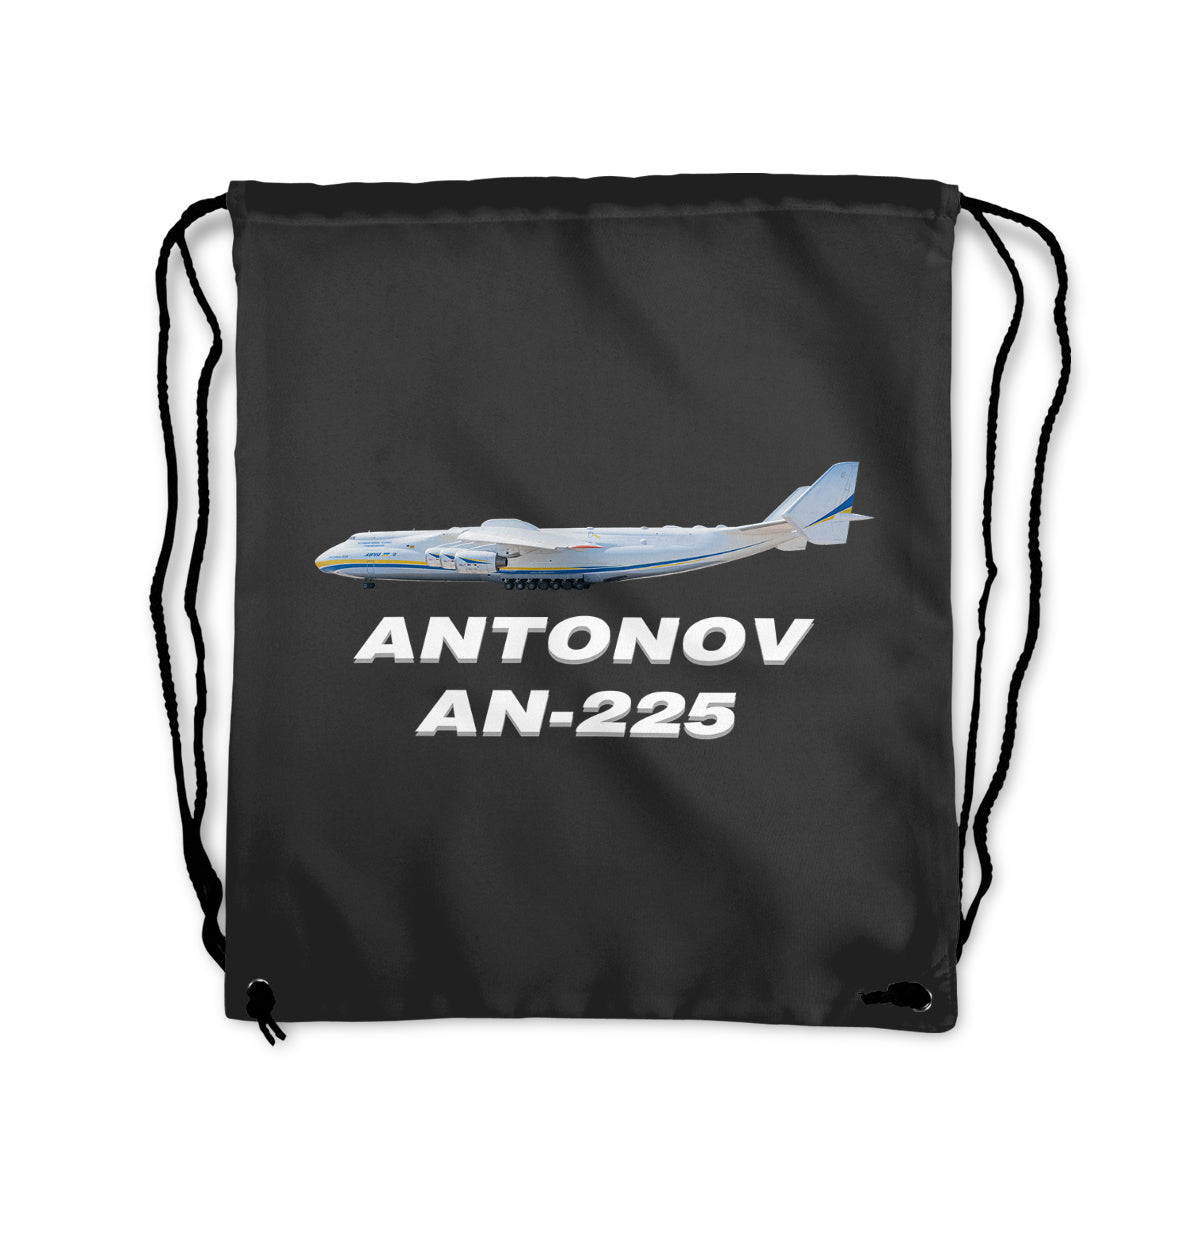 The Antonov AN-225 Designed Drawstring Bags